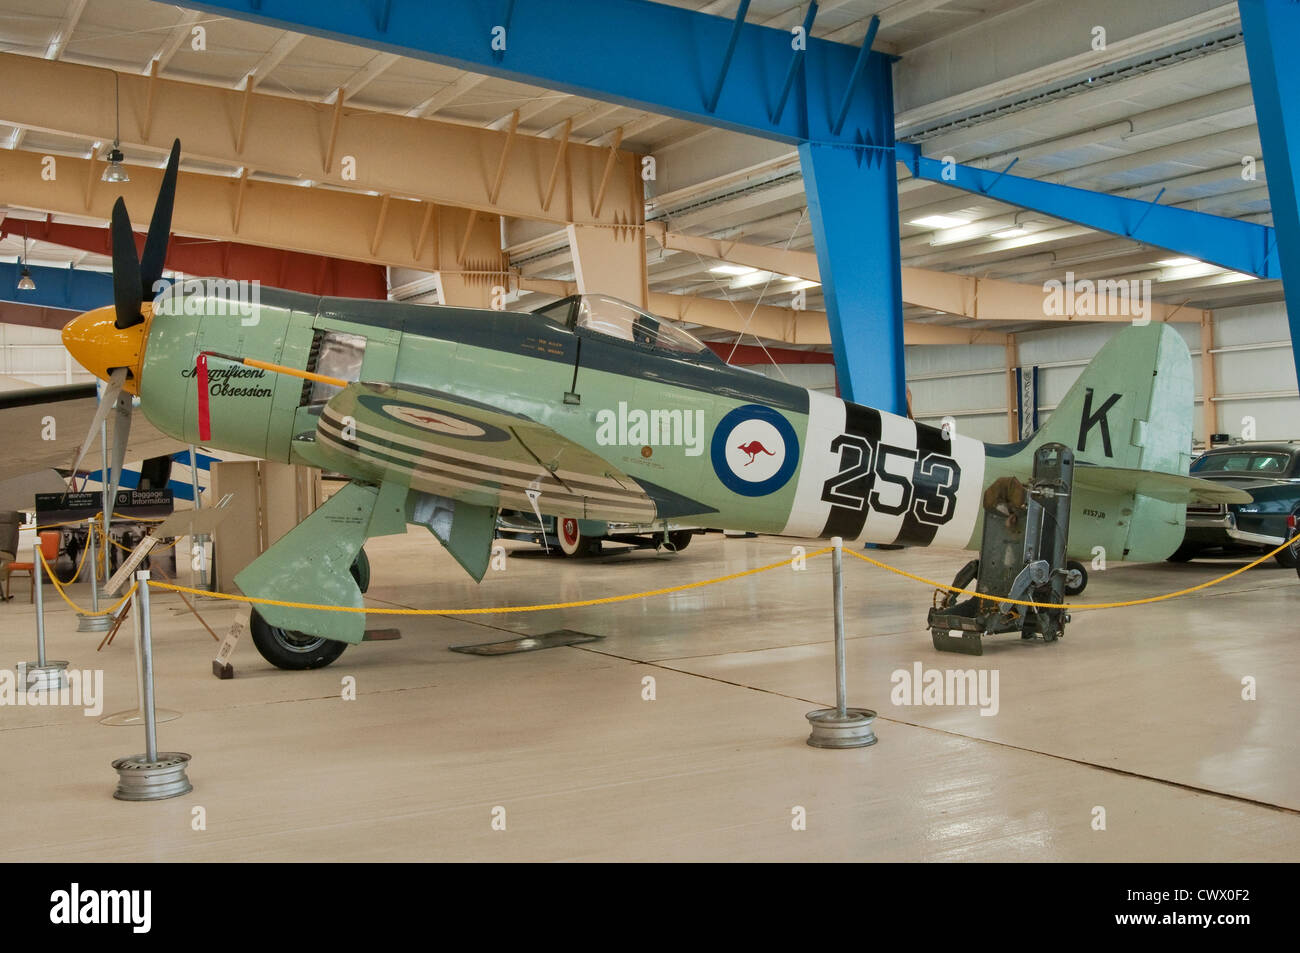 Hawker Sea Fury Mk. X britische Kampfflugzeug, Royal Australian Air Force Markierungen, im Krieg Adler Air Museum, Santa Teresa, New Mexico, USA Stockfoto